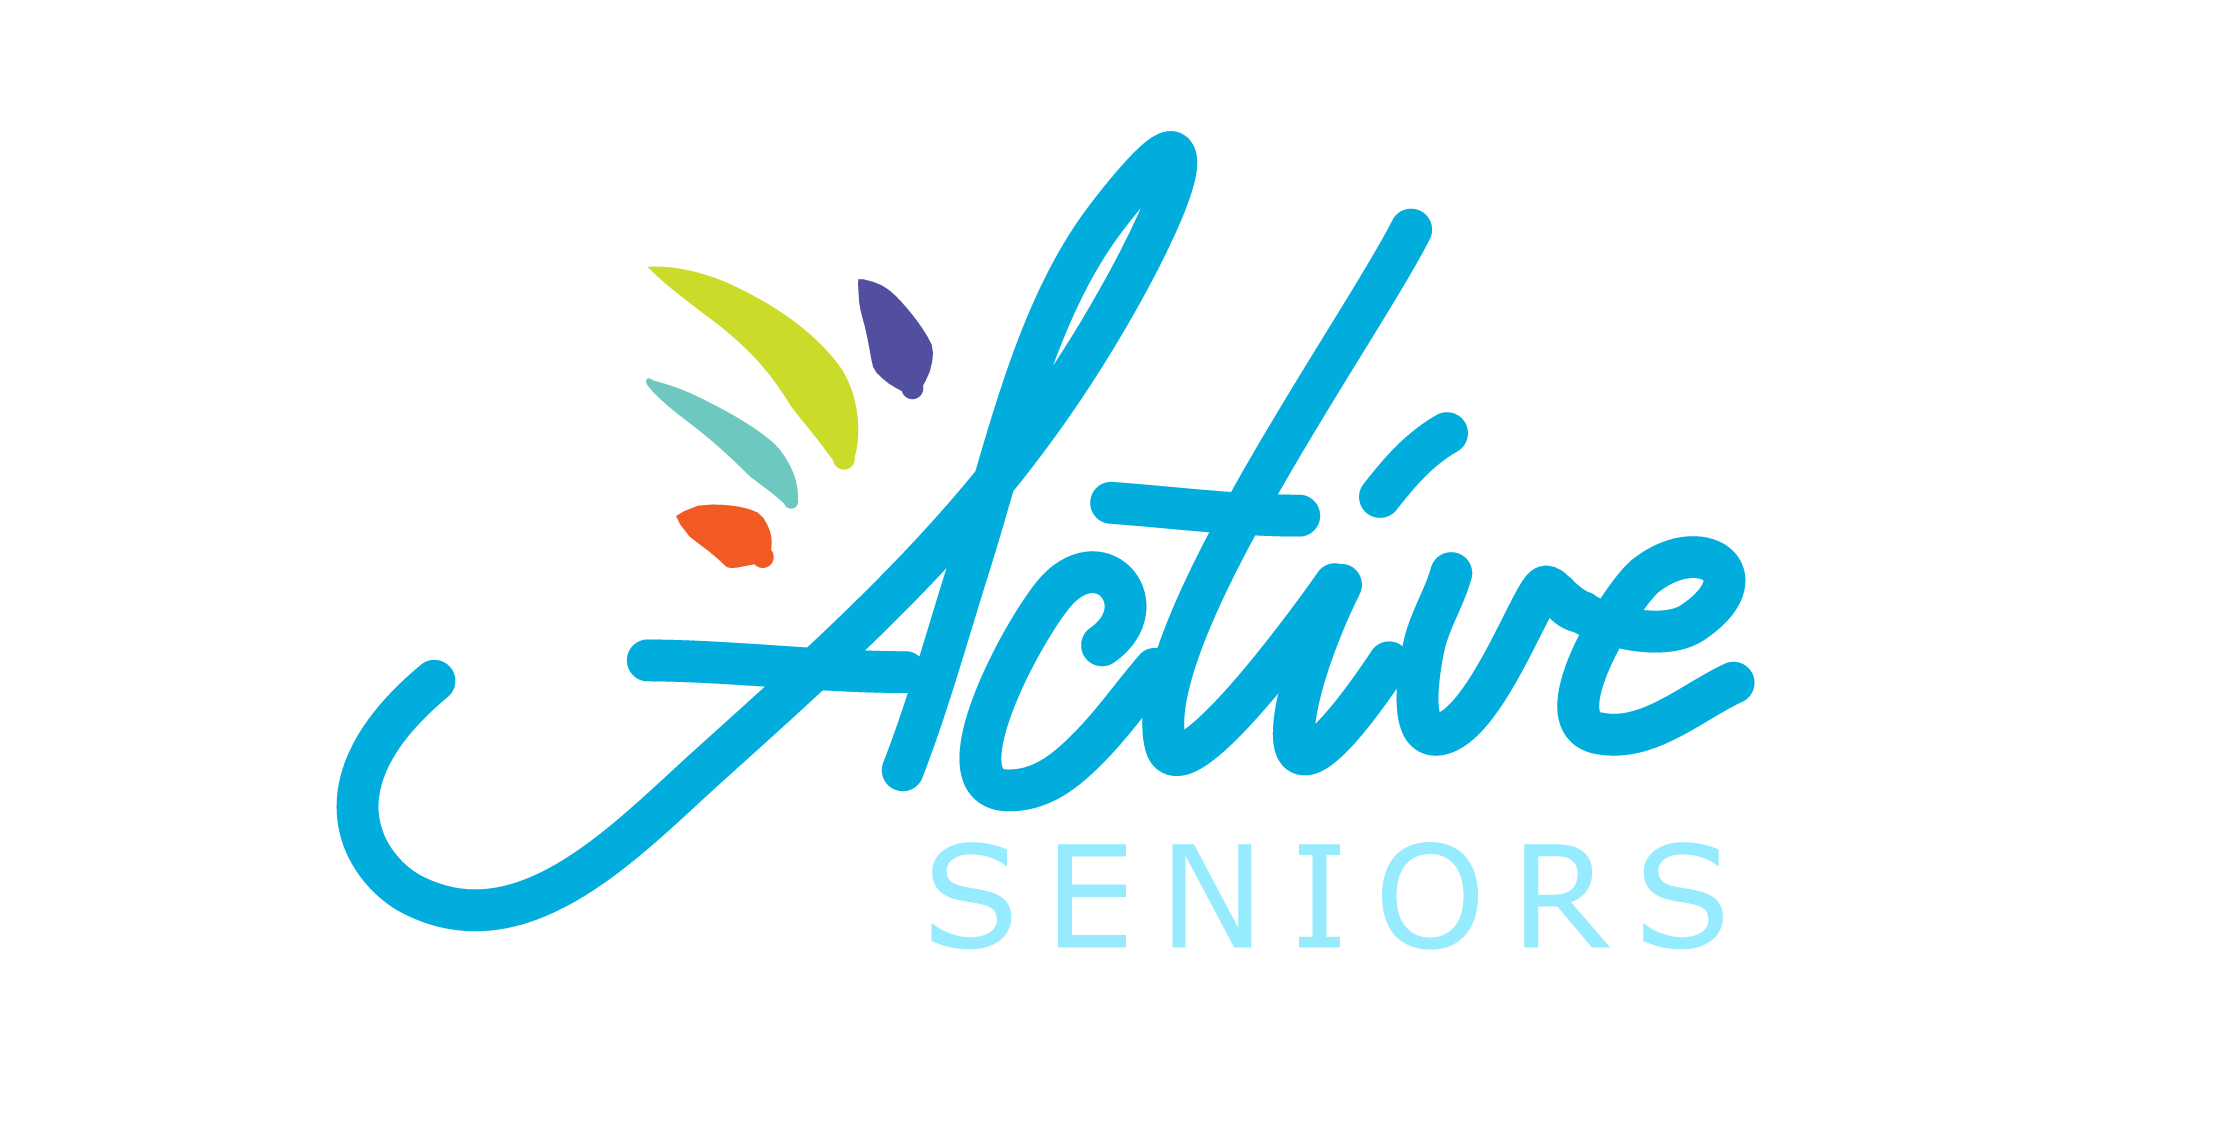 Active Seniors - Exercise Classes